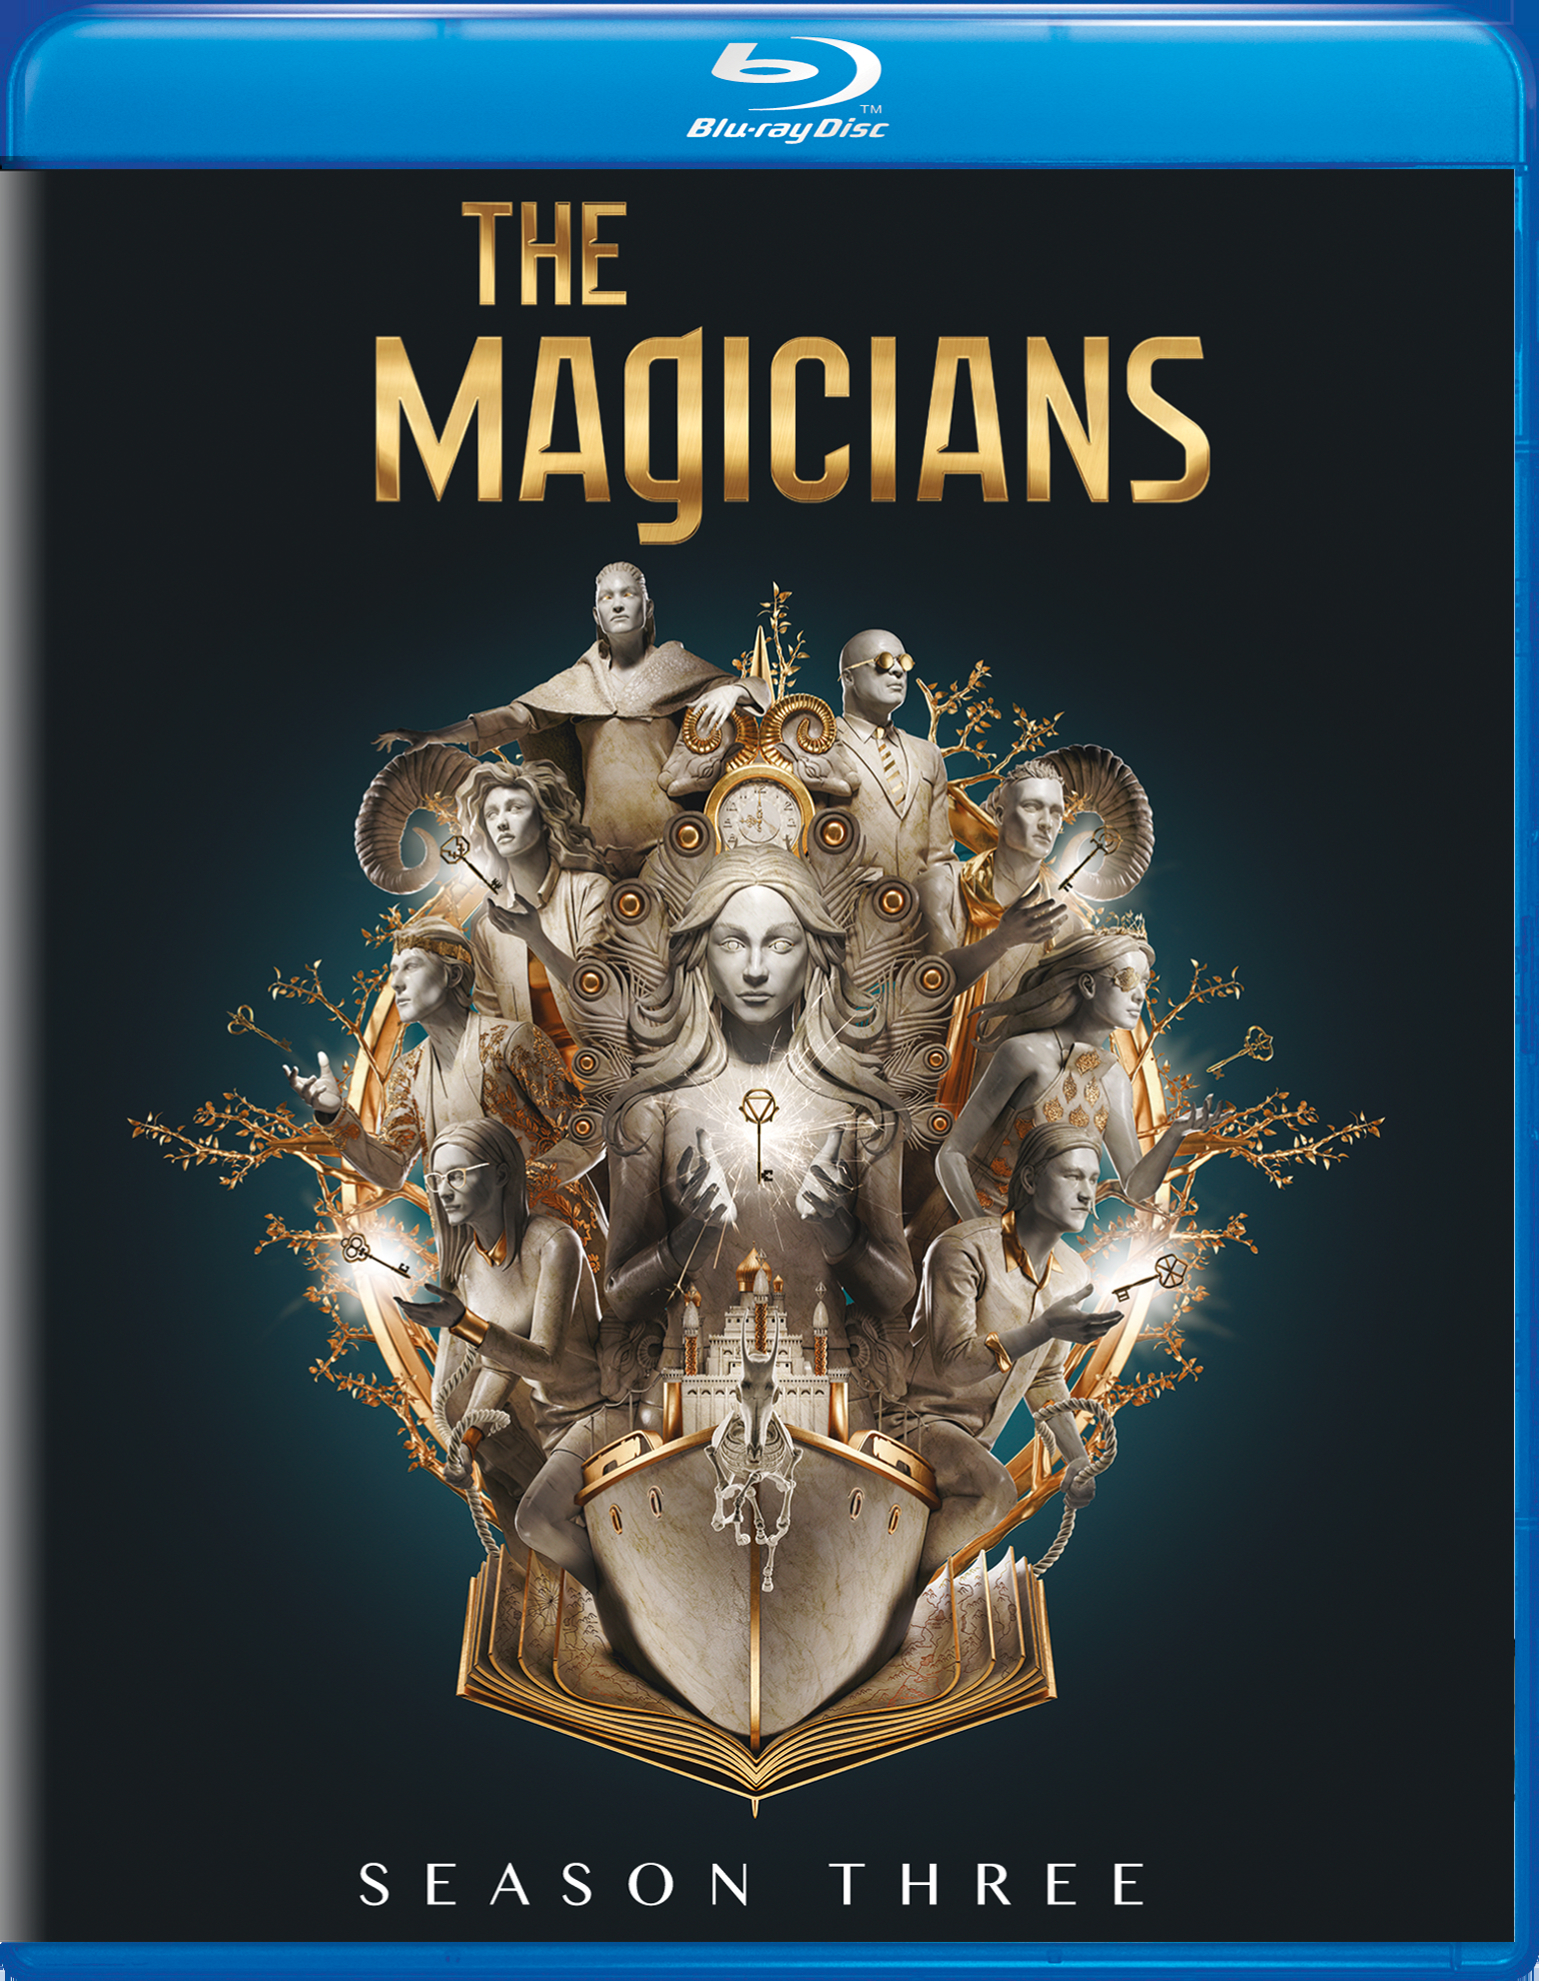 The Magicians: Season Three (Blu-ray) - Blu-ray [ 2018 ]  - Drama Television On Blu-ray - TV Shows On GRUV